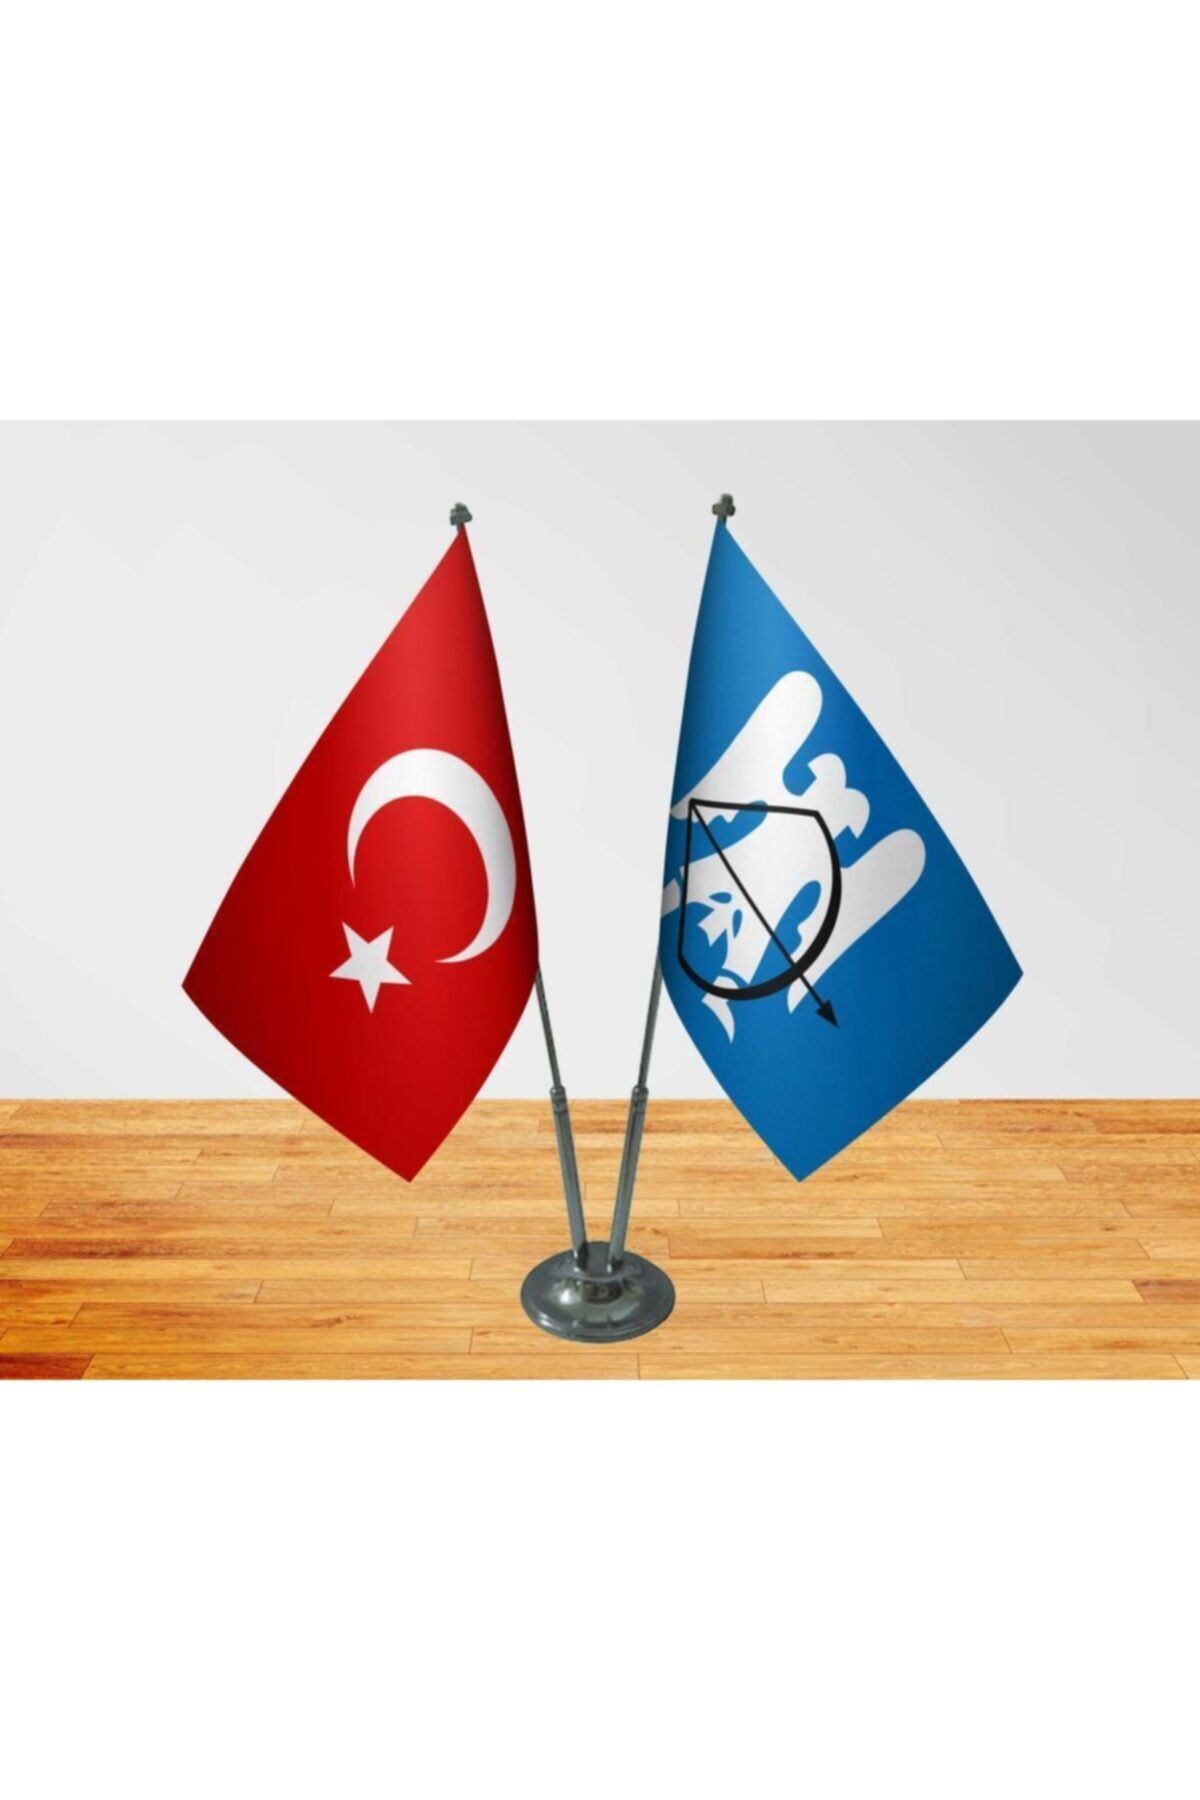 Vatan Bayrak Masa Üstü Selçuklu Devleti Bayrağı Türk Bayrağı Ikili Krom Direk Masa Bayrağı